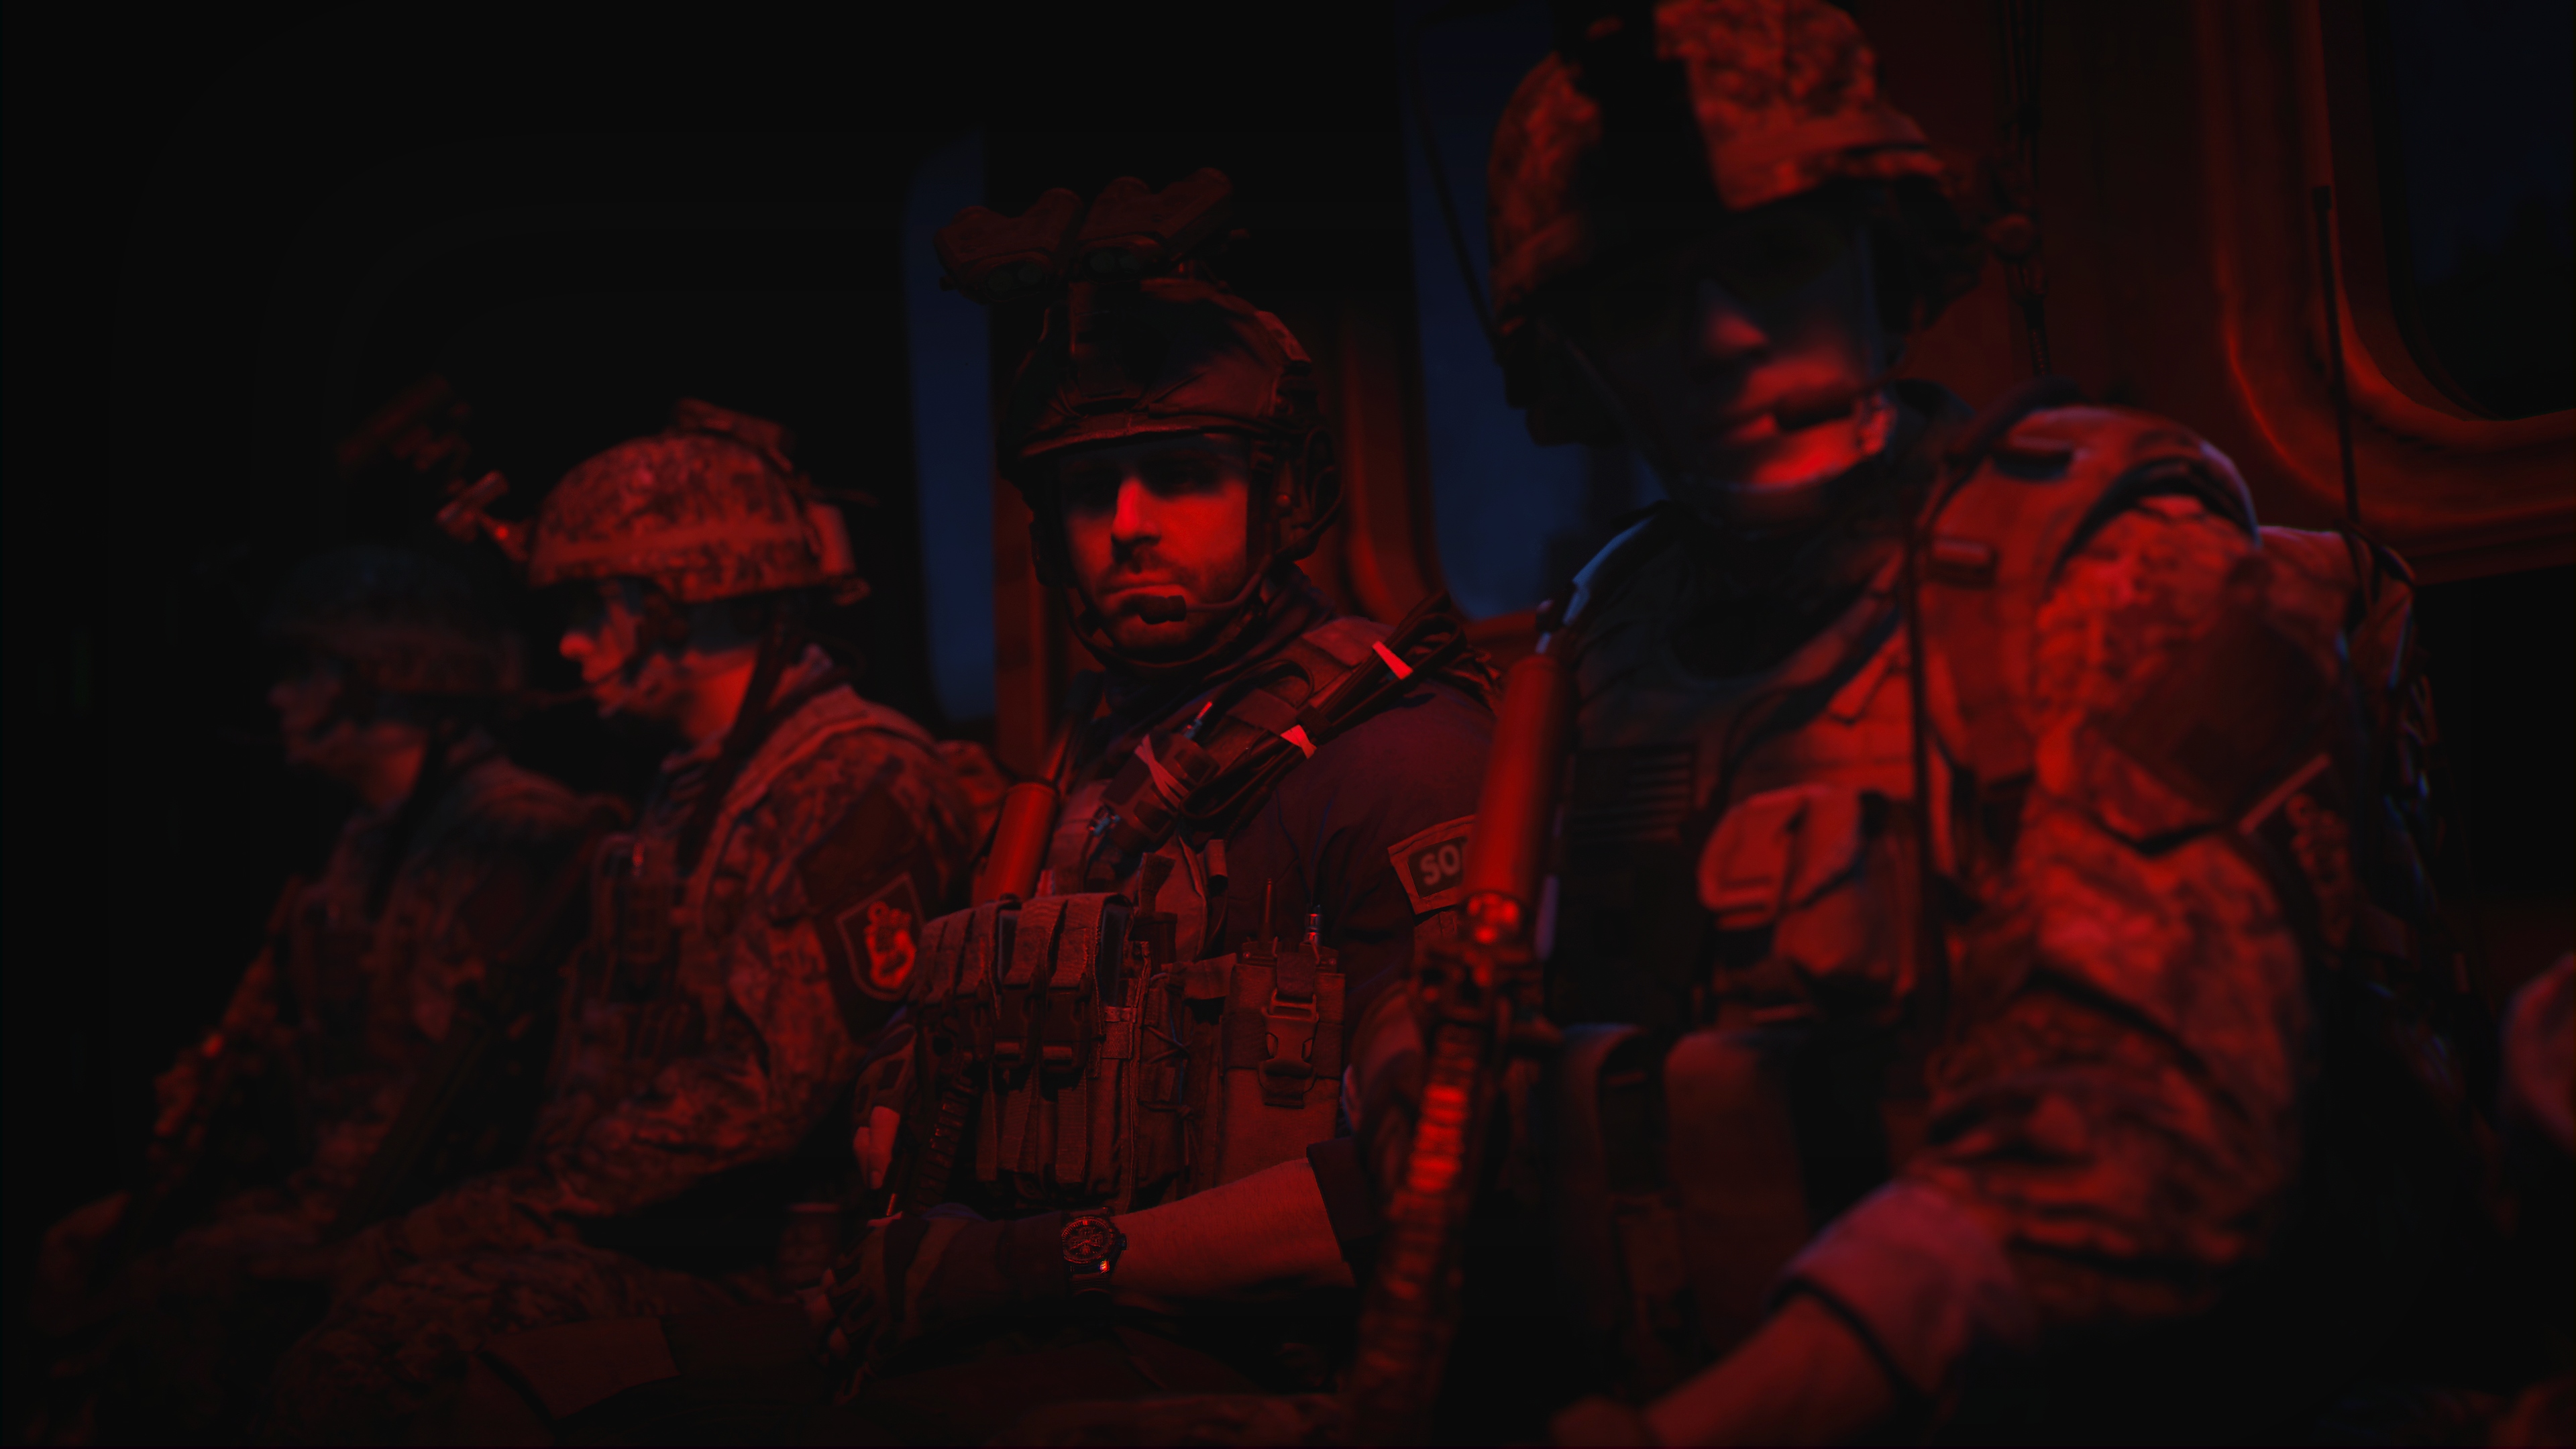 Call of Duty: Modern Warfare 2 2022 captura de pantalla mostrando a tres personajes en una luz roja